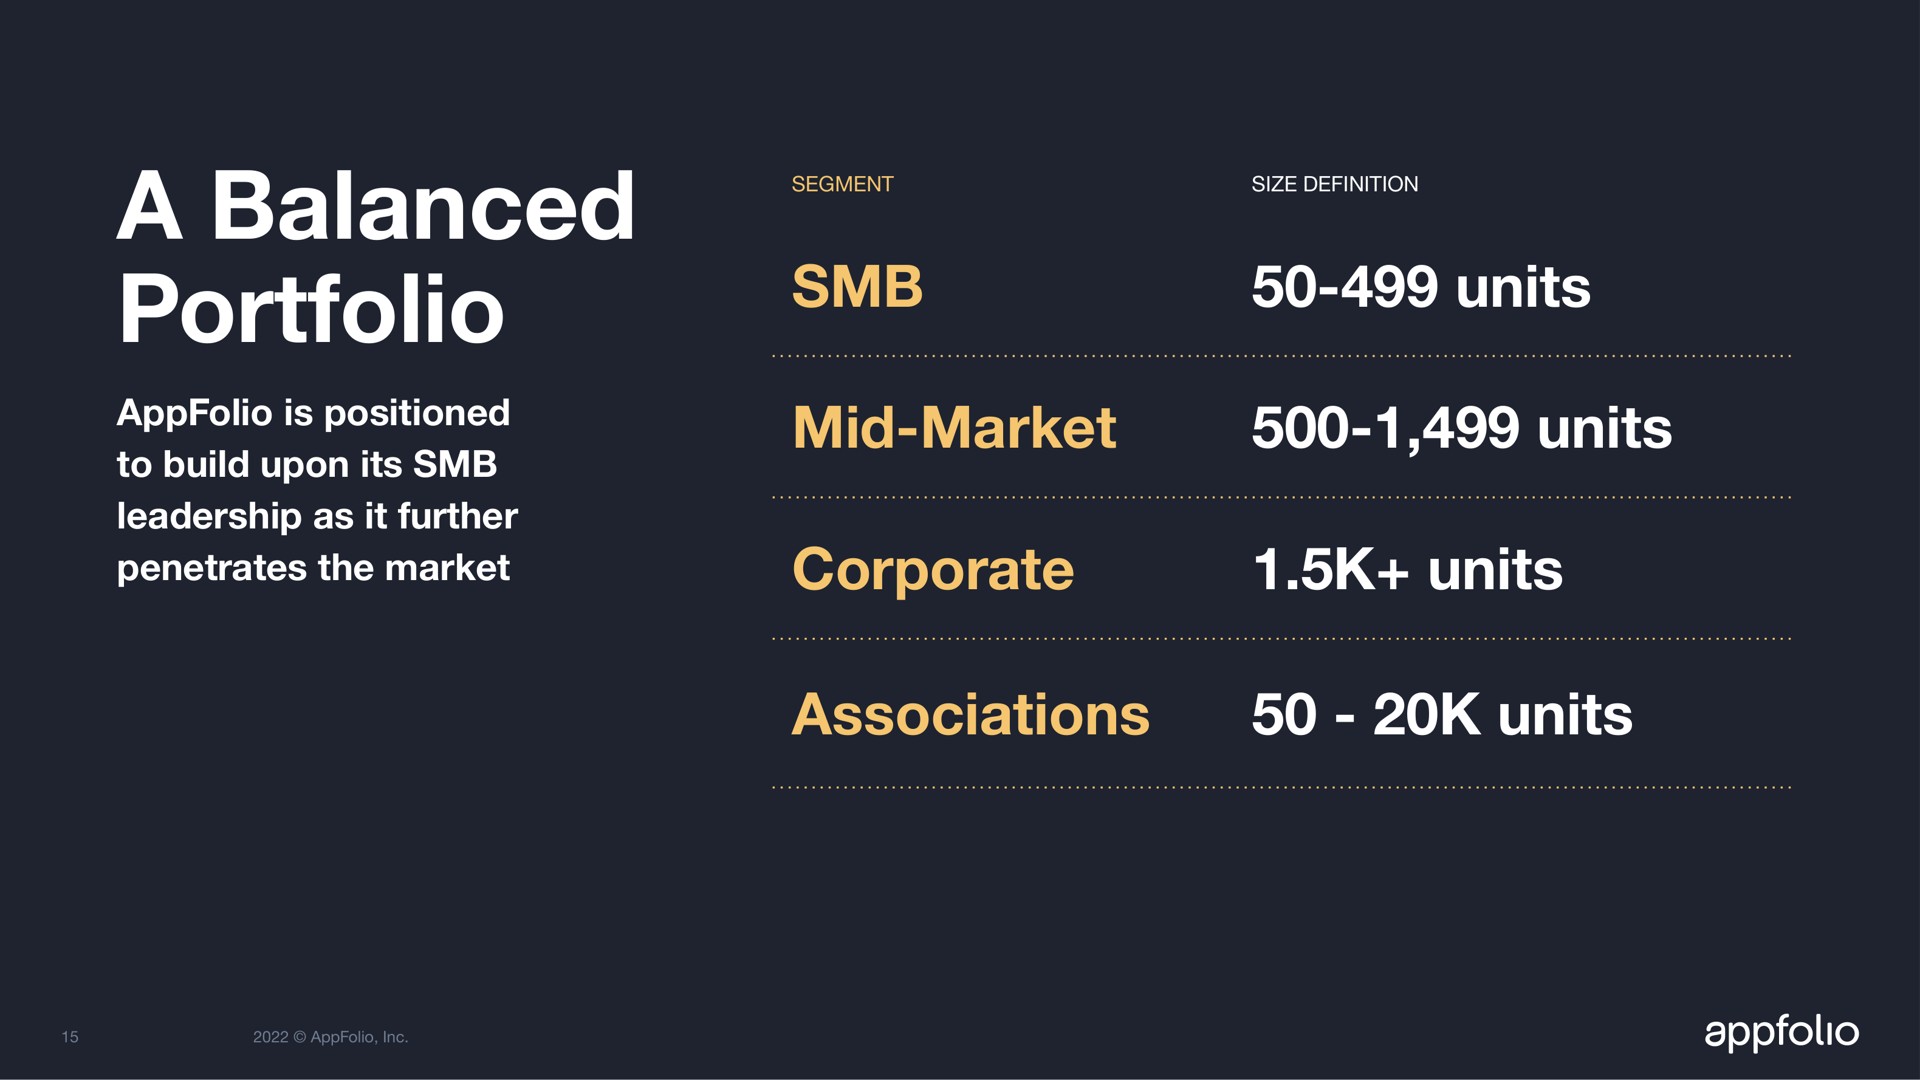 a balanced portfolio units mid market units corporate units associations units | AppFolio